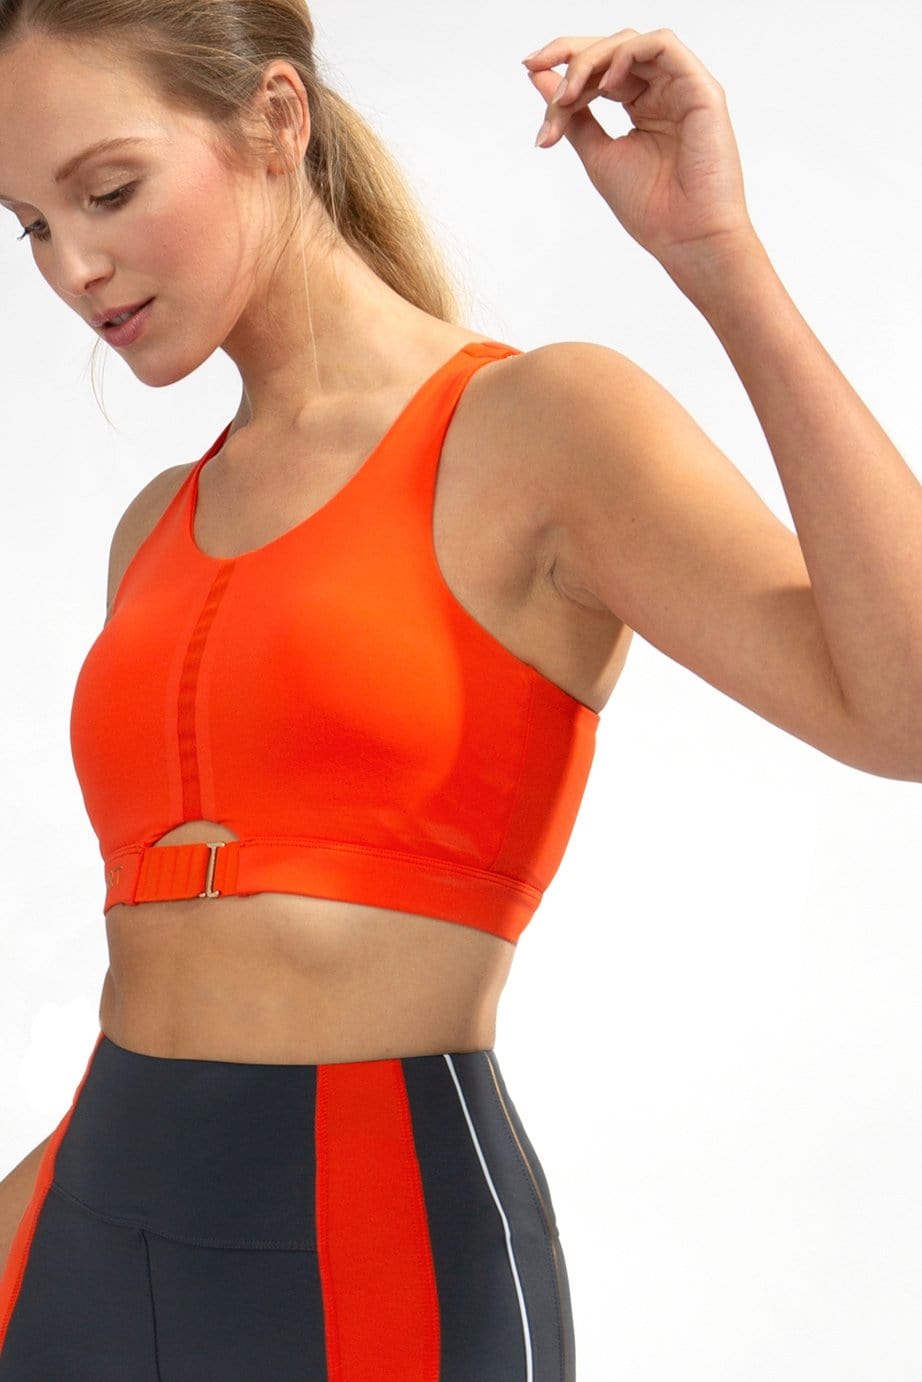 XRT workout orange sports bra